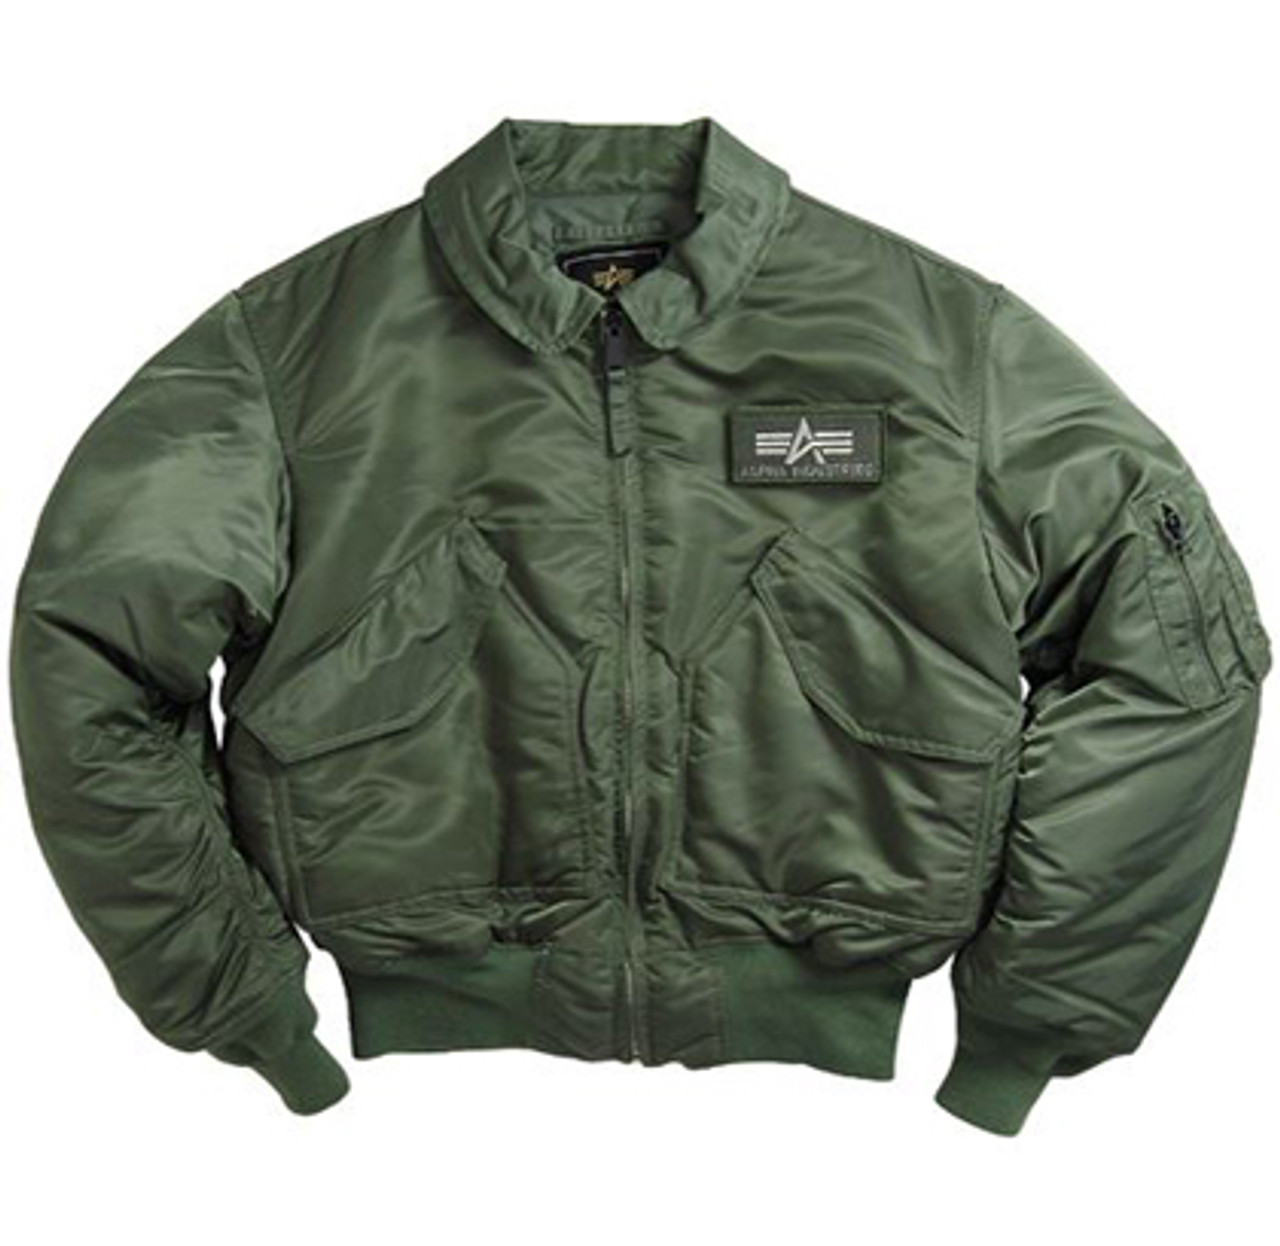 Shop Alpha CWU 45/P Flight Jackets - Fatigues Army Navy Gear Co